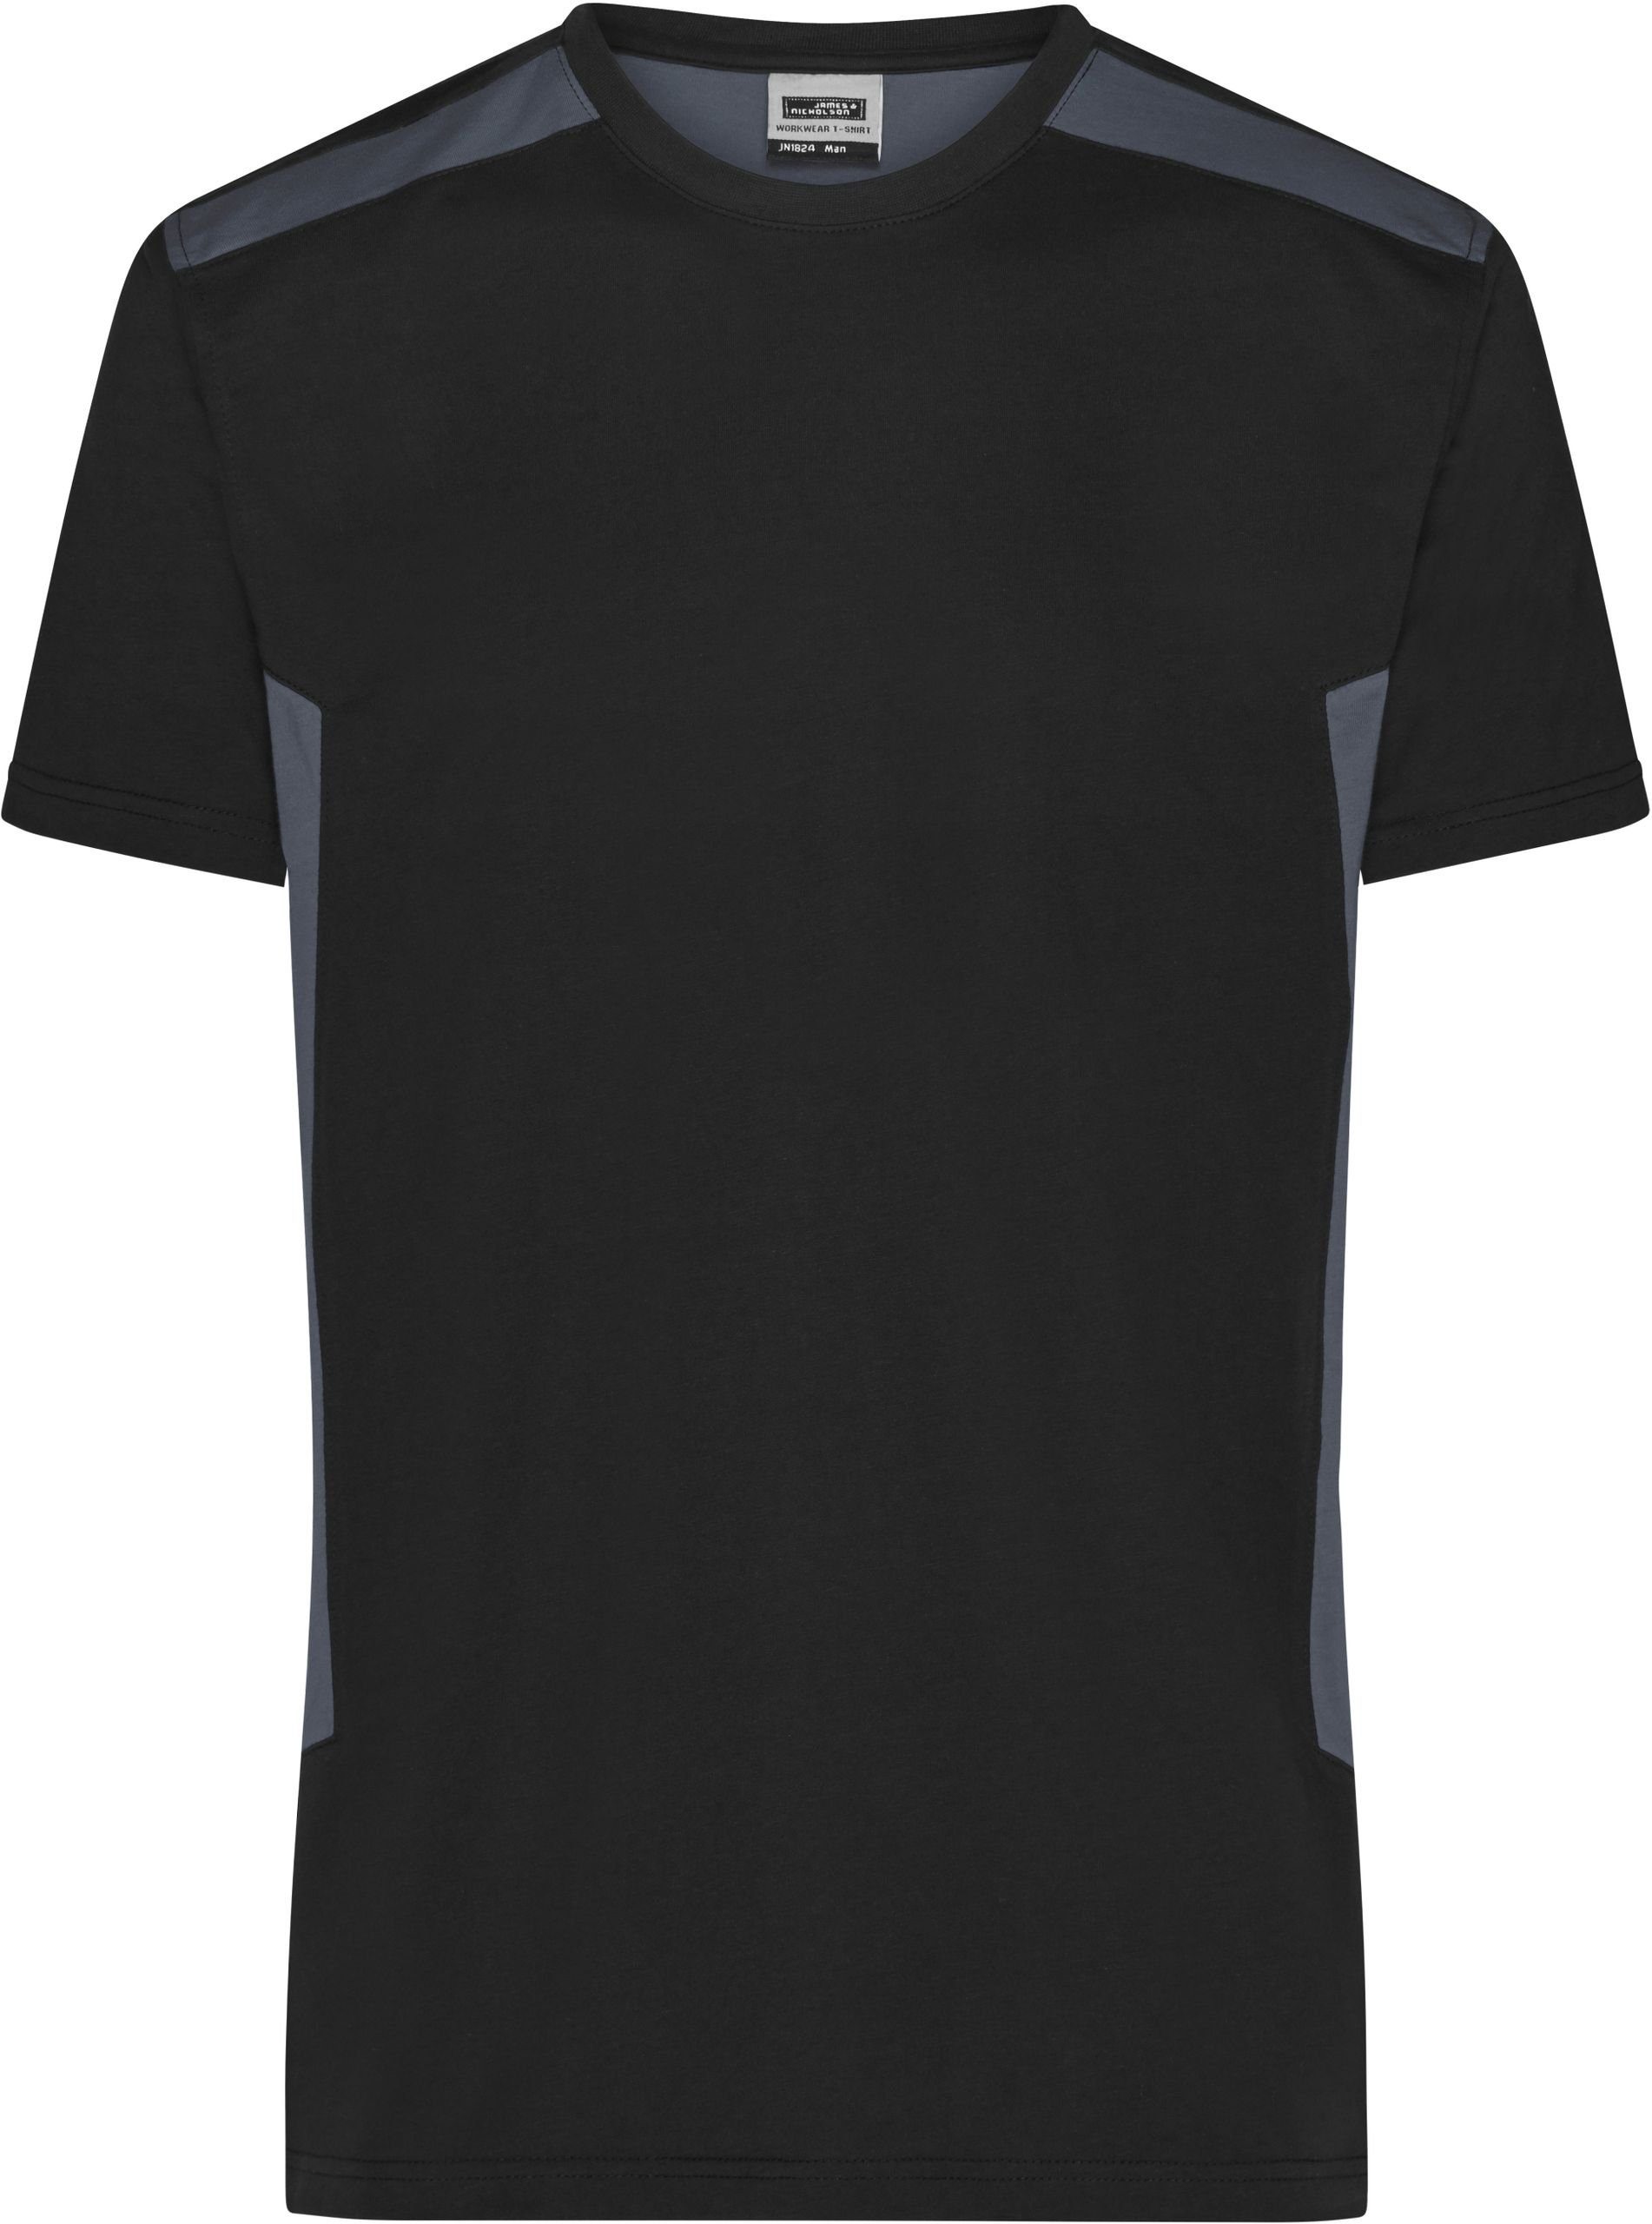 James & Nicholson T-Shirt Herren Workwear T-Shirt - Strong black/carbon